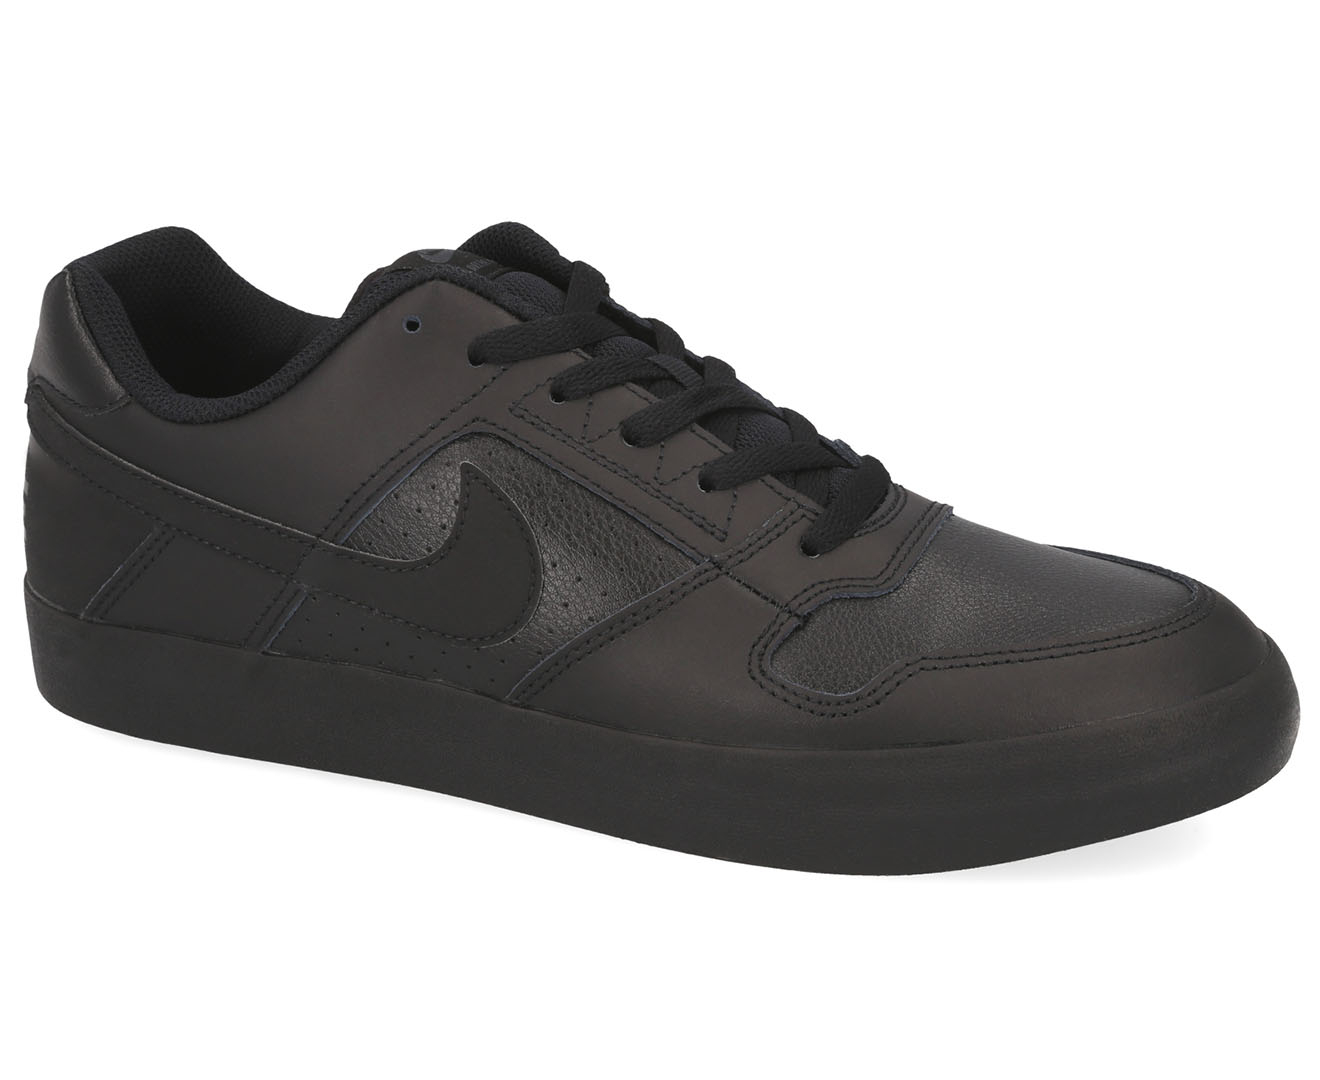 Nike Men's SB Delta Force Vulc Skate Sneakers - Black/Anthracite